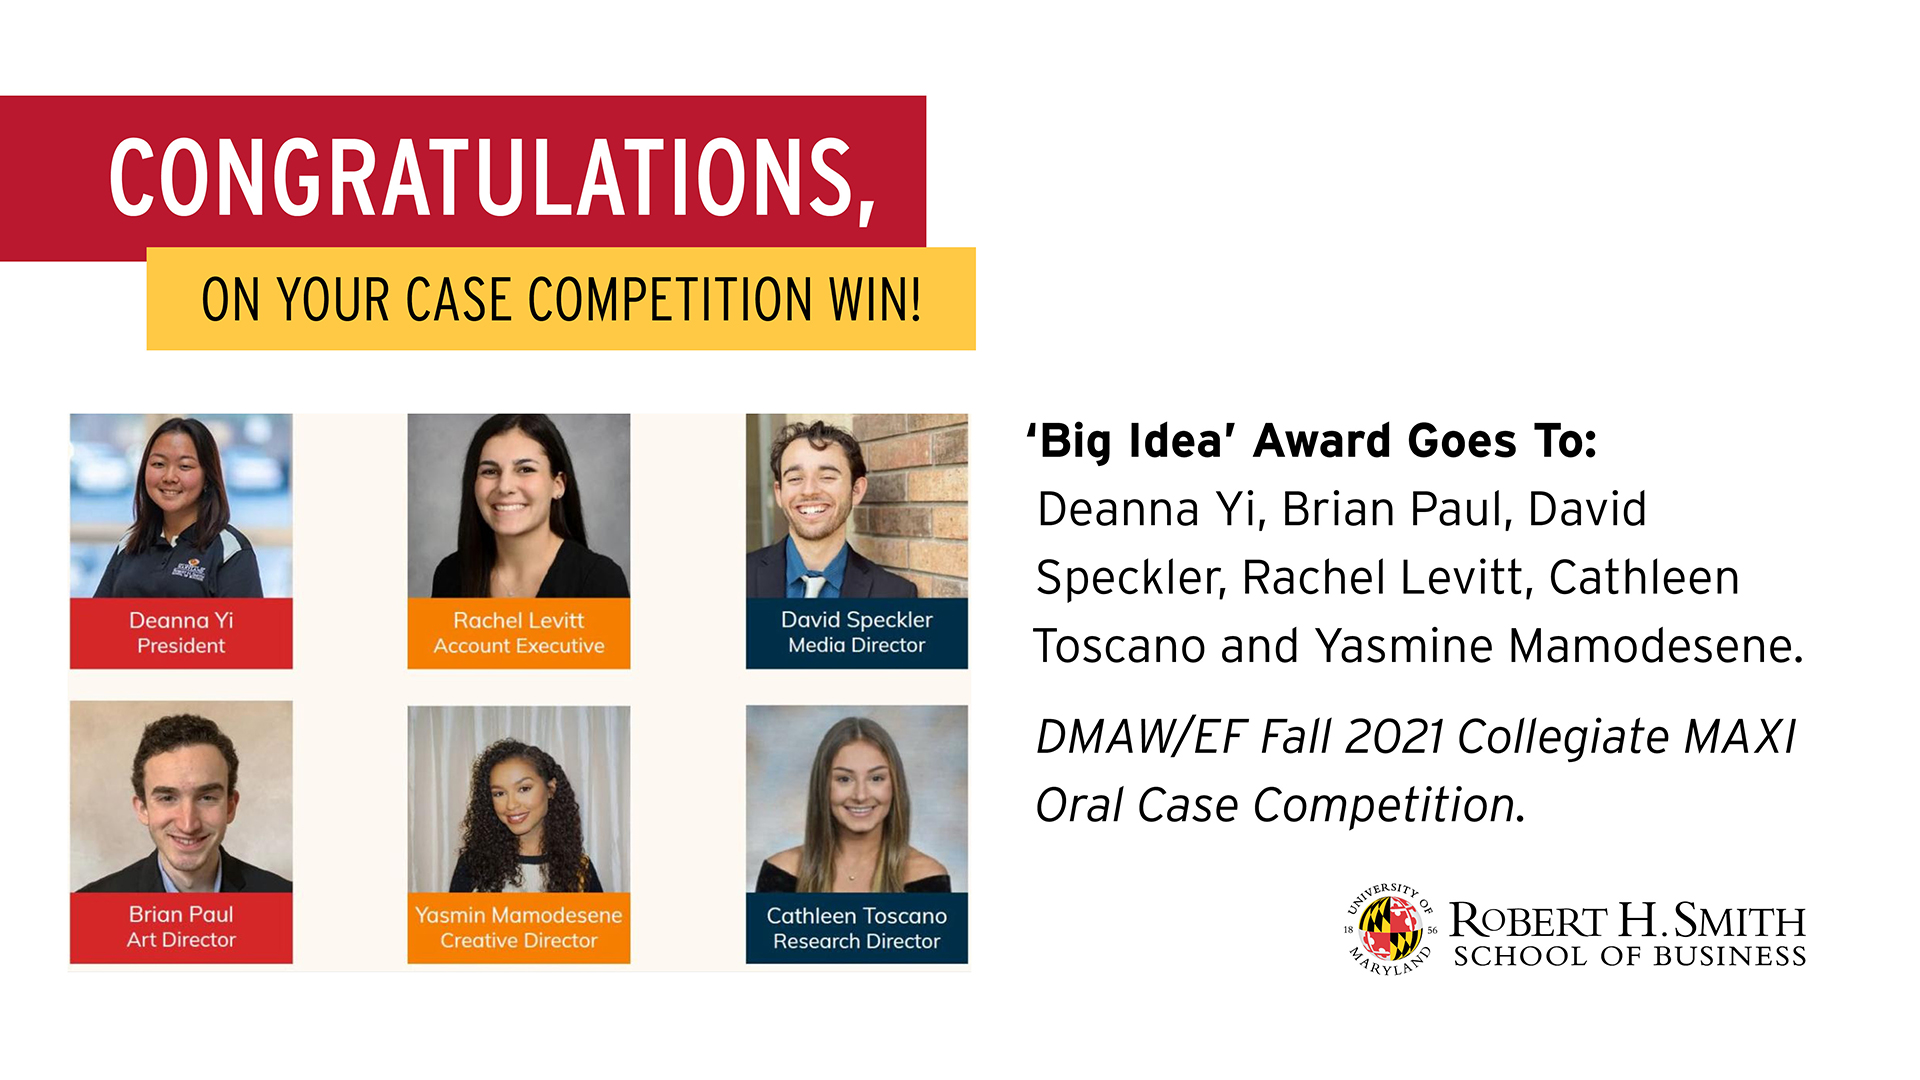 The Maryland Smith undergraduate team won the event’s "Big Idea" Award. Those presenting were: Deanna Yi, Brian Paul, David Speckler and Rachel Levitt. Other team contributors were: Cathleen Toscano and Yasmine Mamodesene.